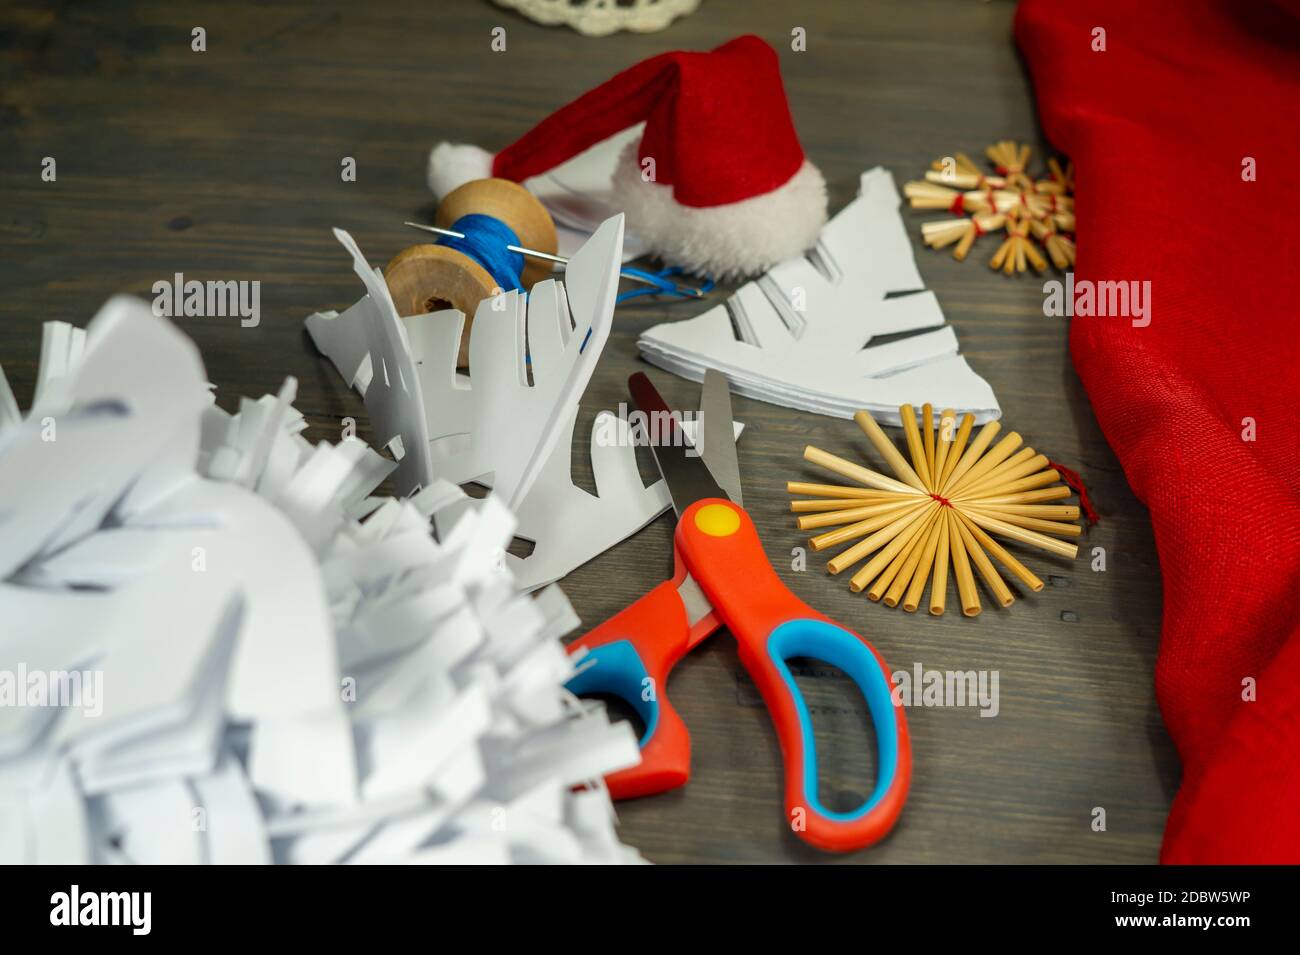 Scissors cut paper xmas christmas present holiday pair hi-res